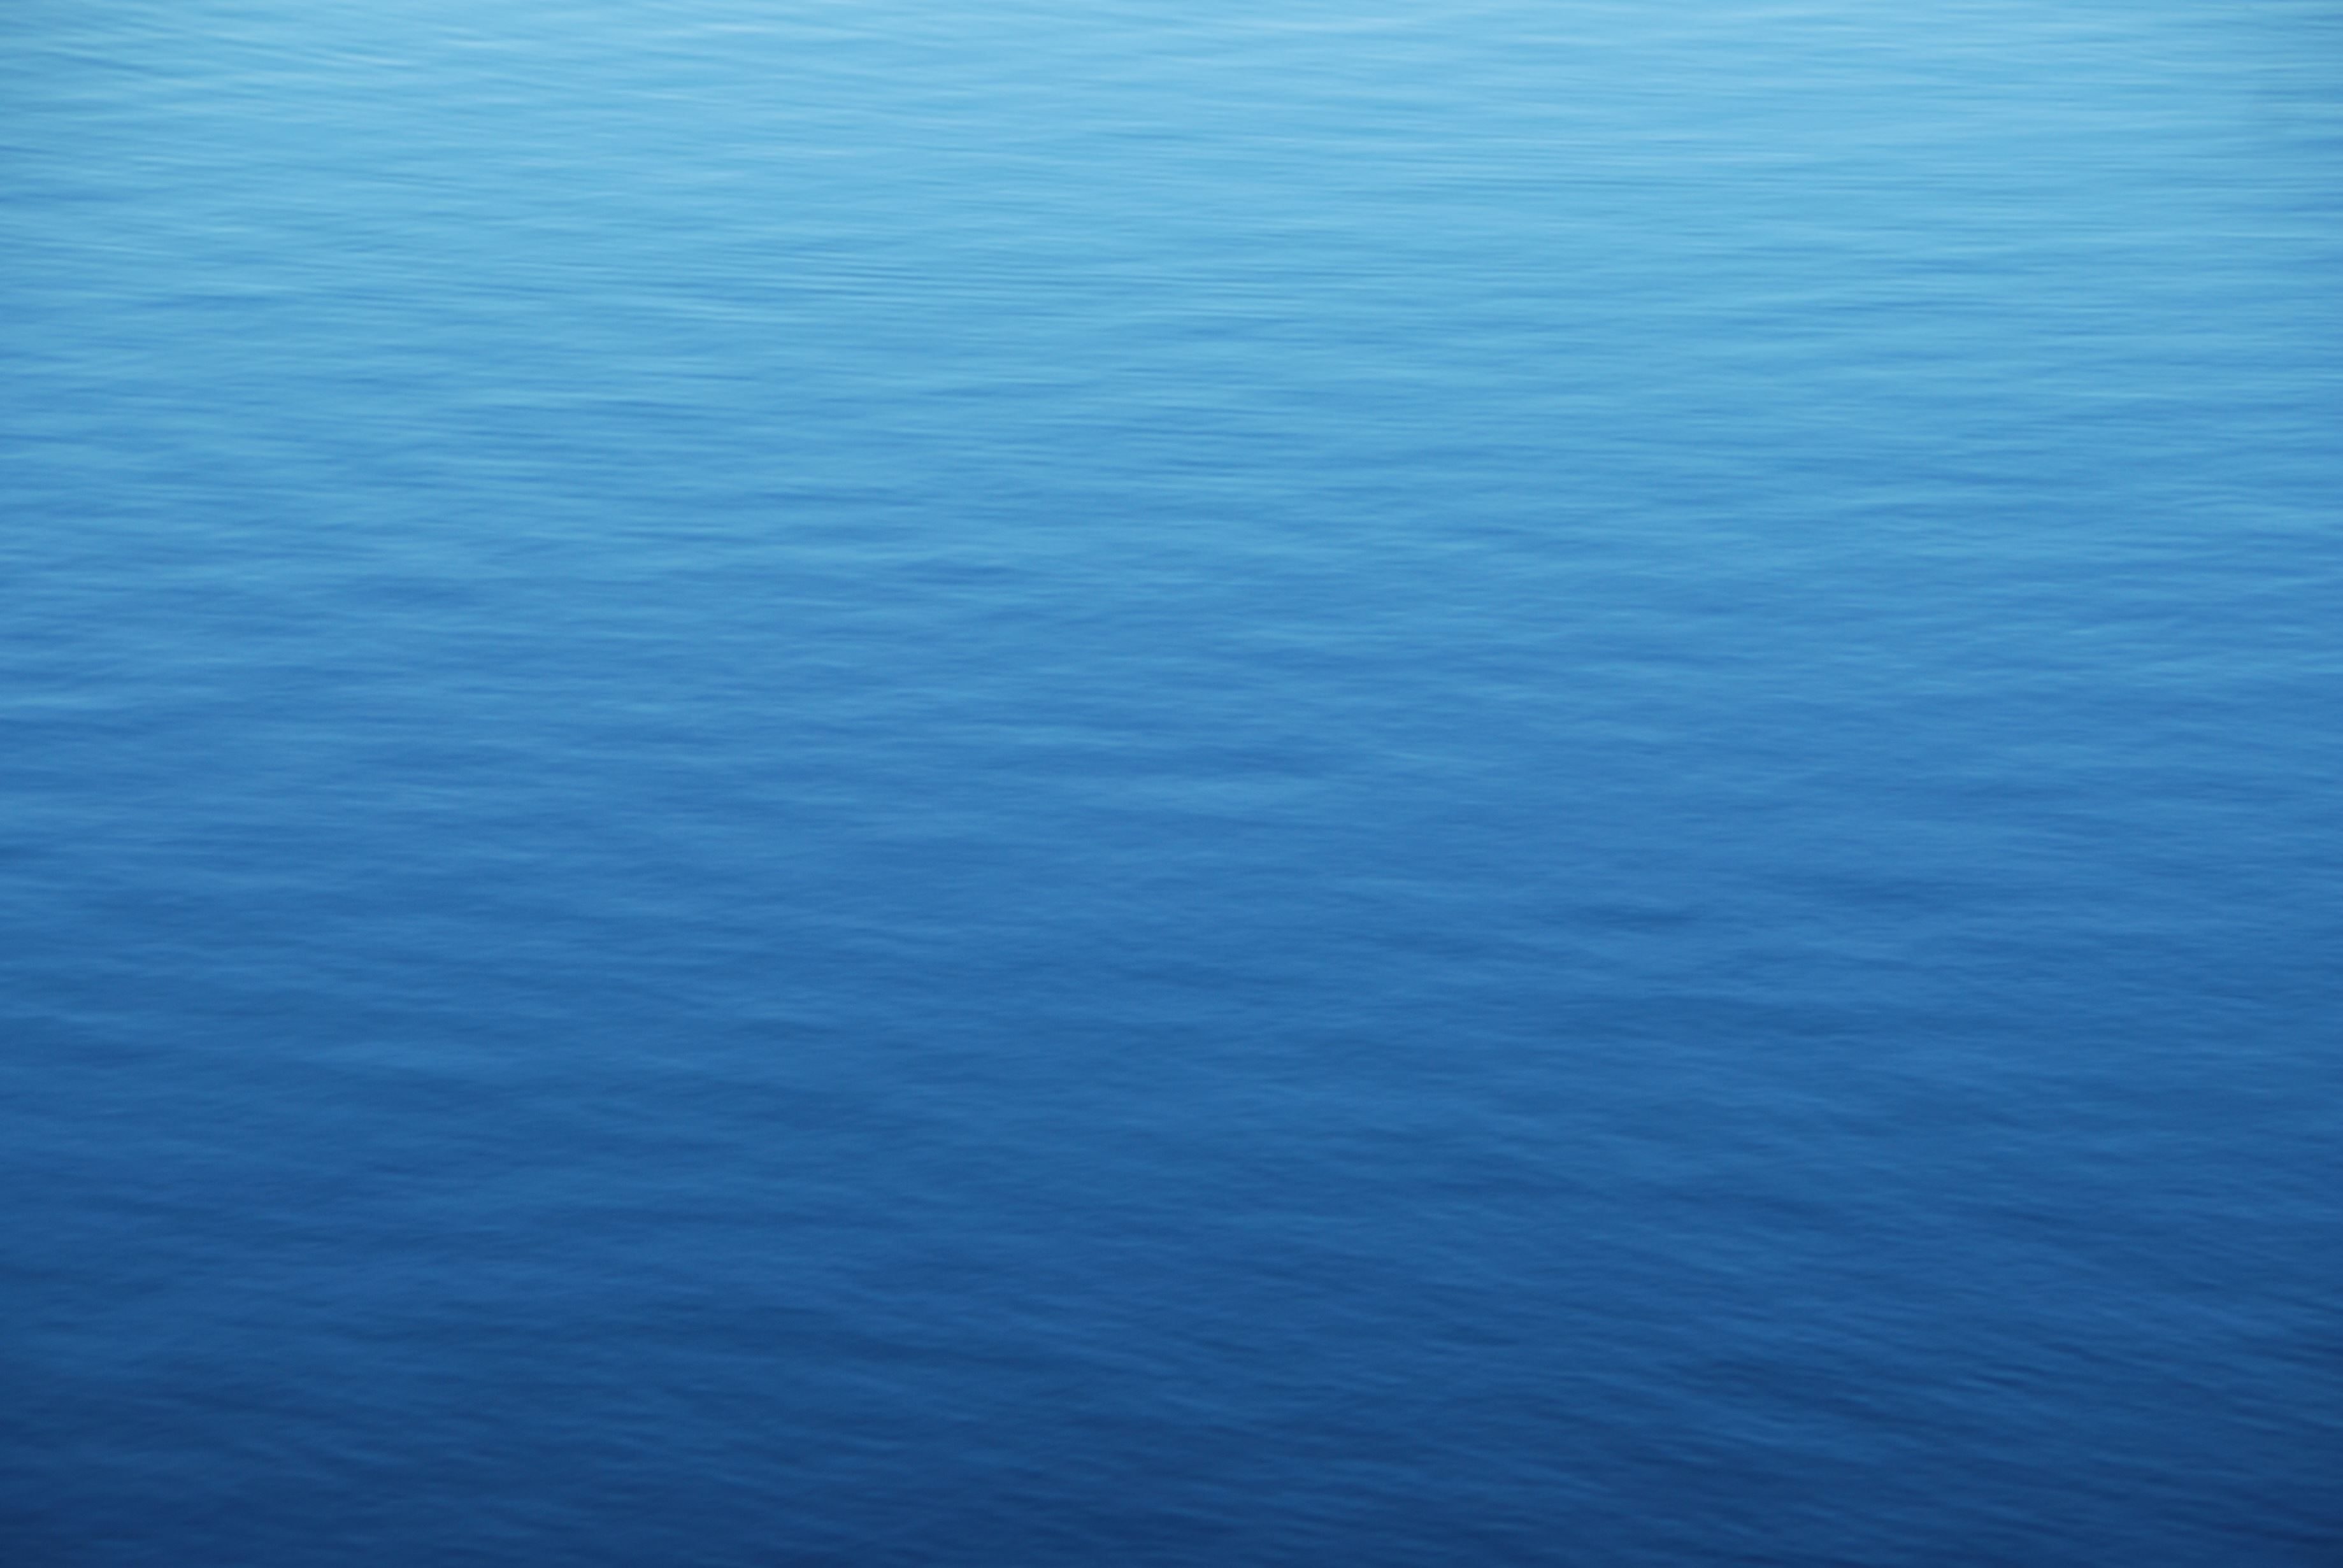 Image libre: mer, eau, bleu